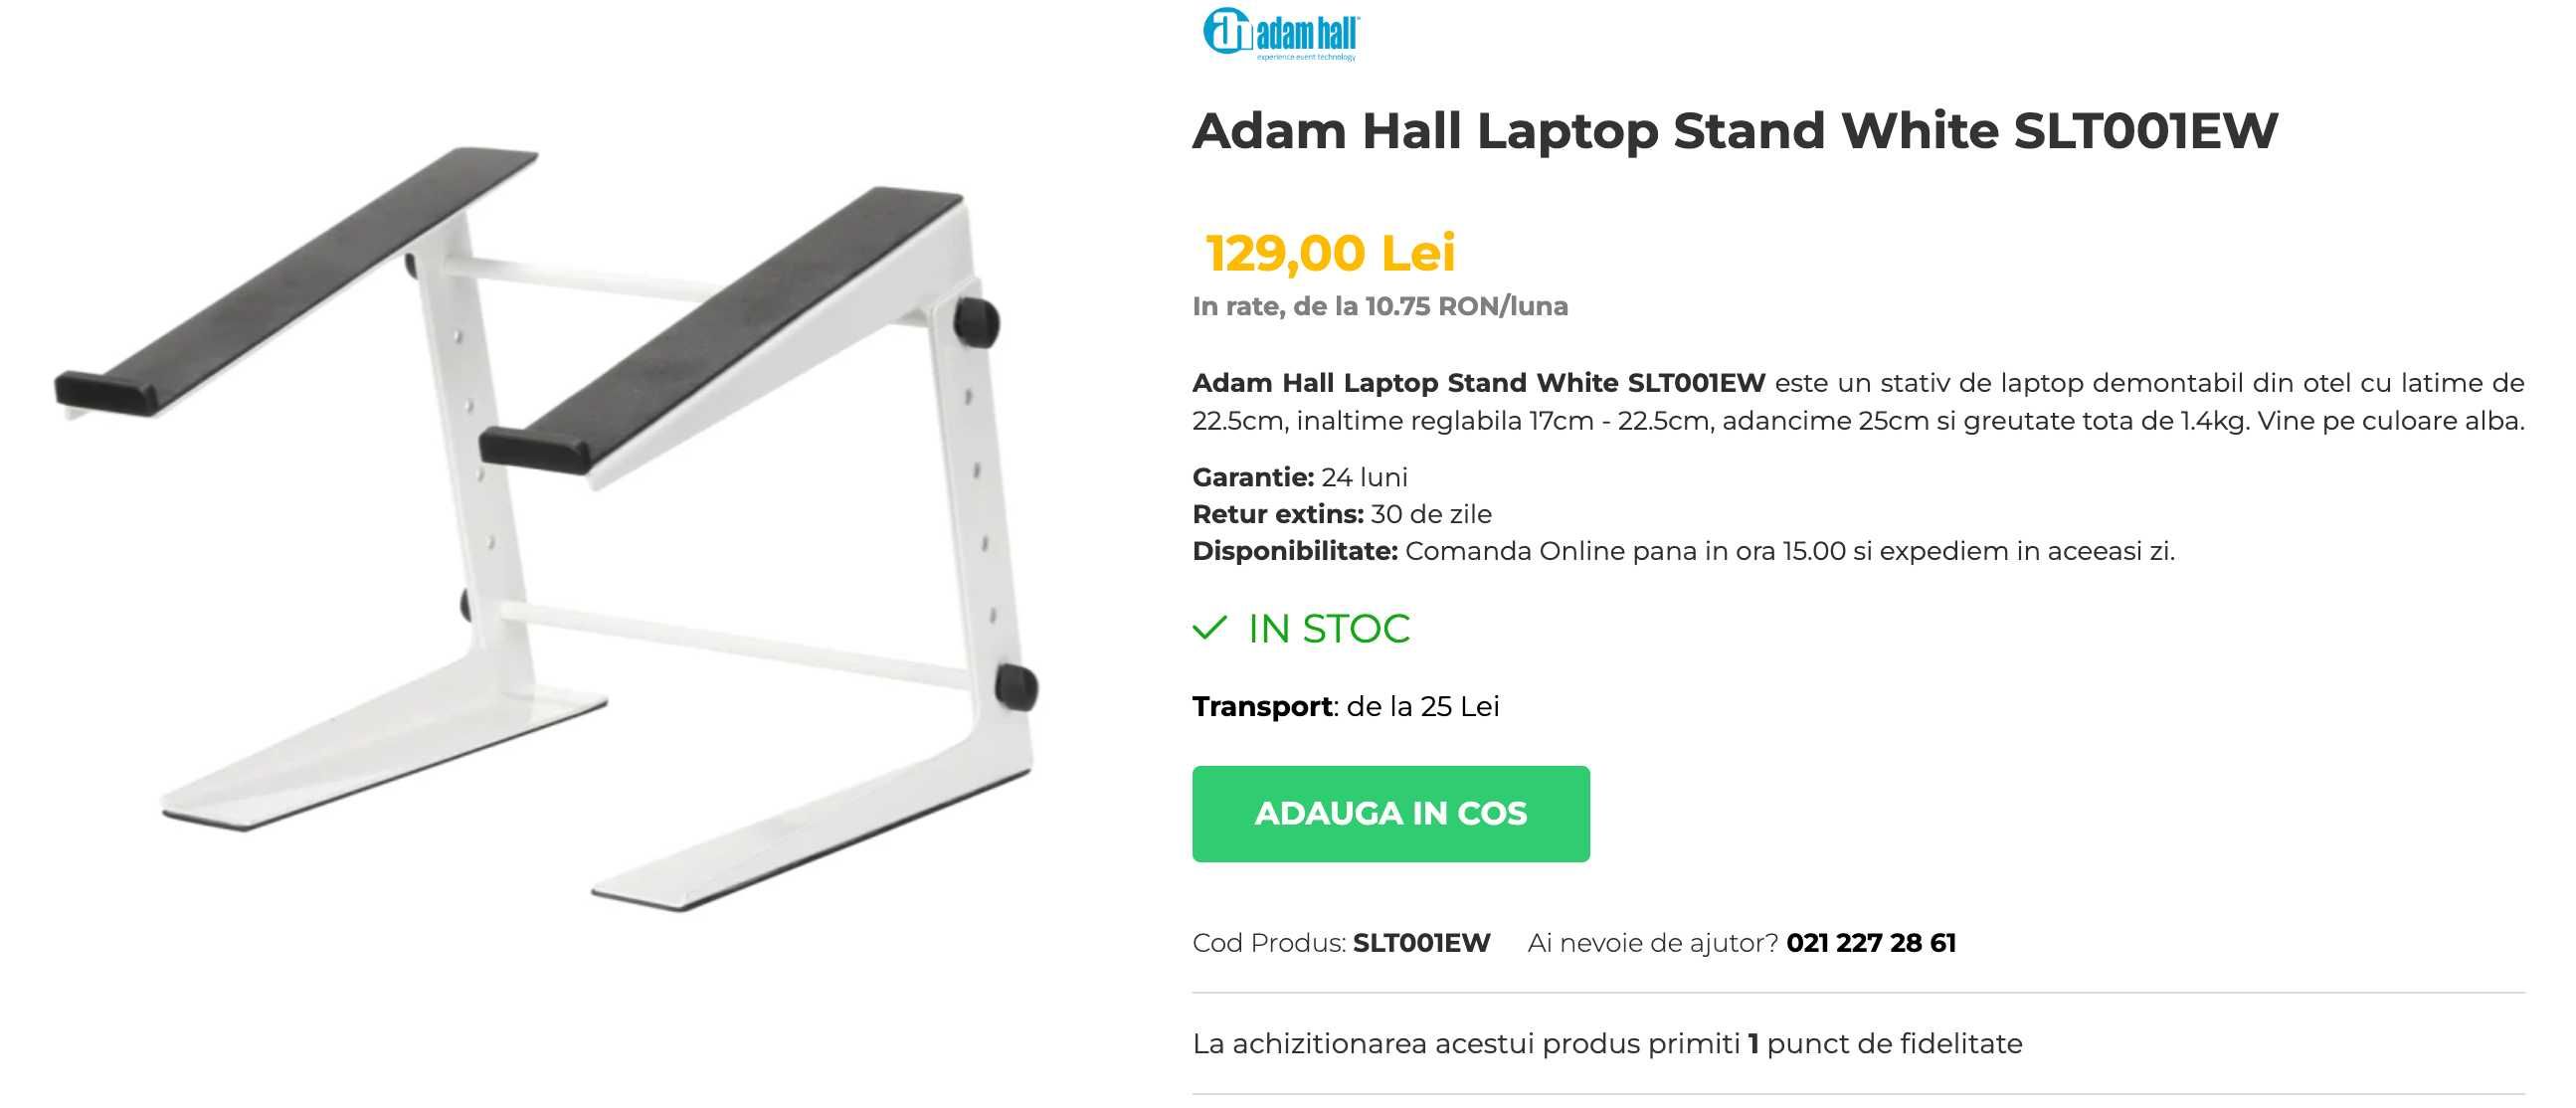 Adam Hall suport Laptop SLT001 / stand laptop